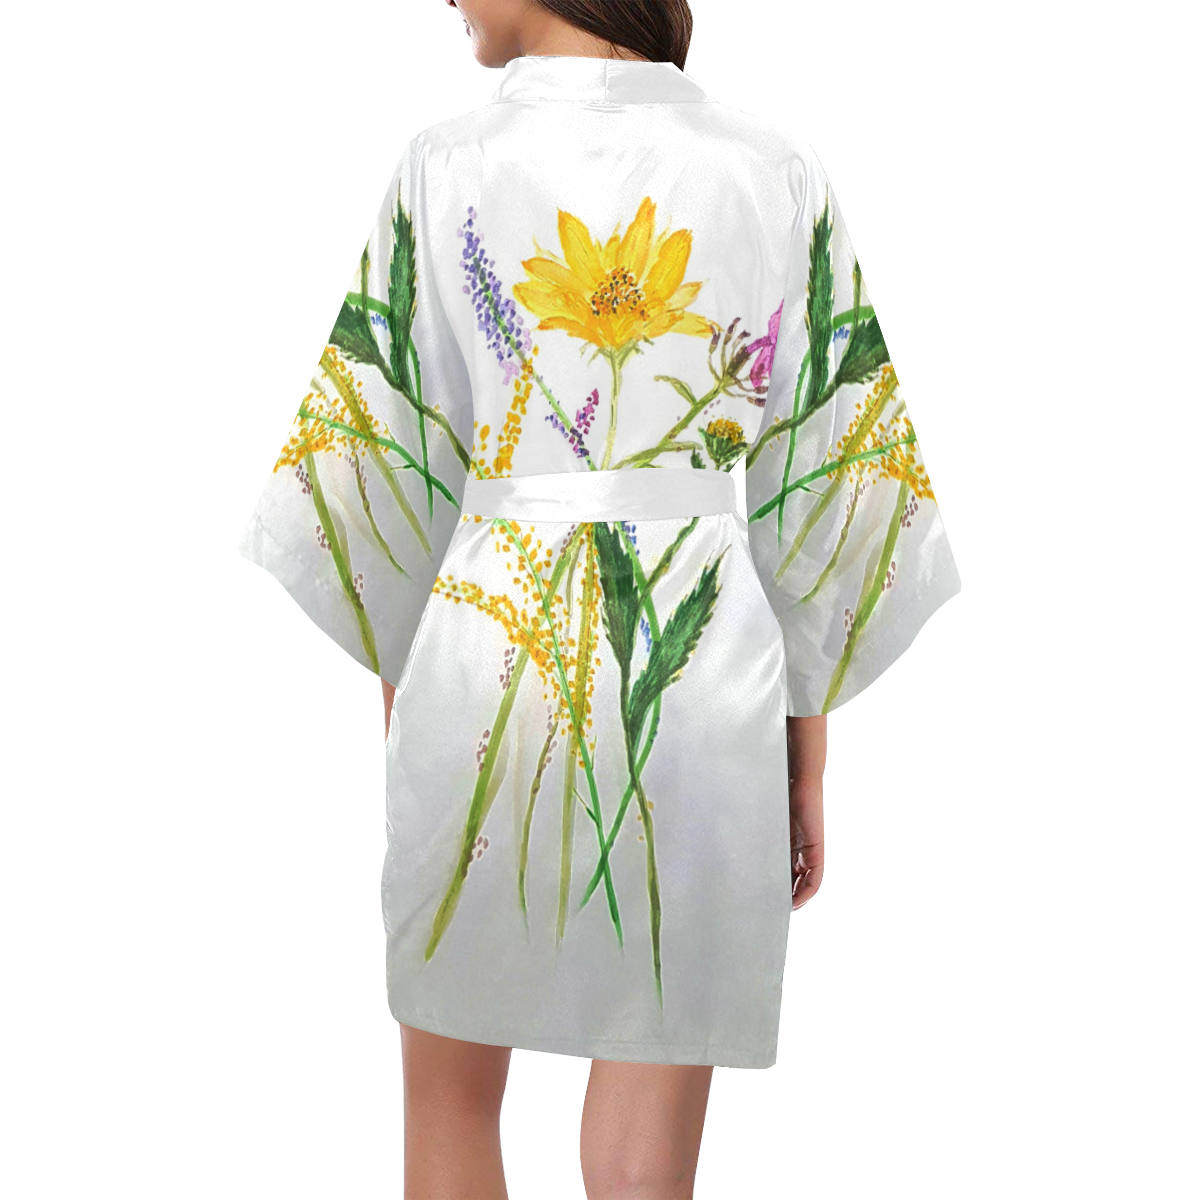 FLOWERS BY JASMIN Kimono Robe